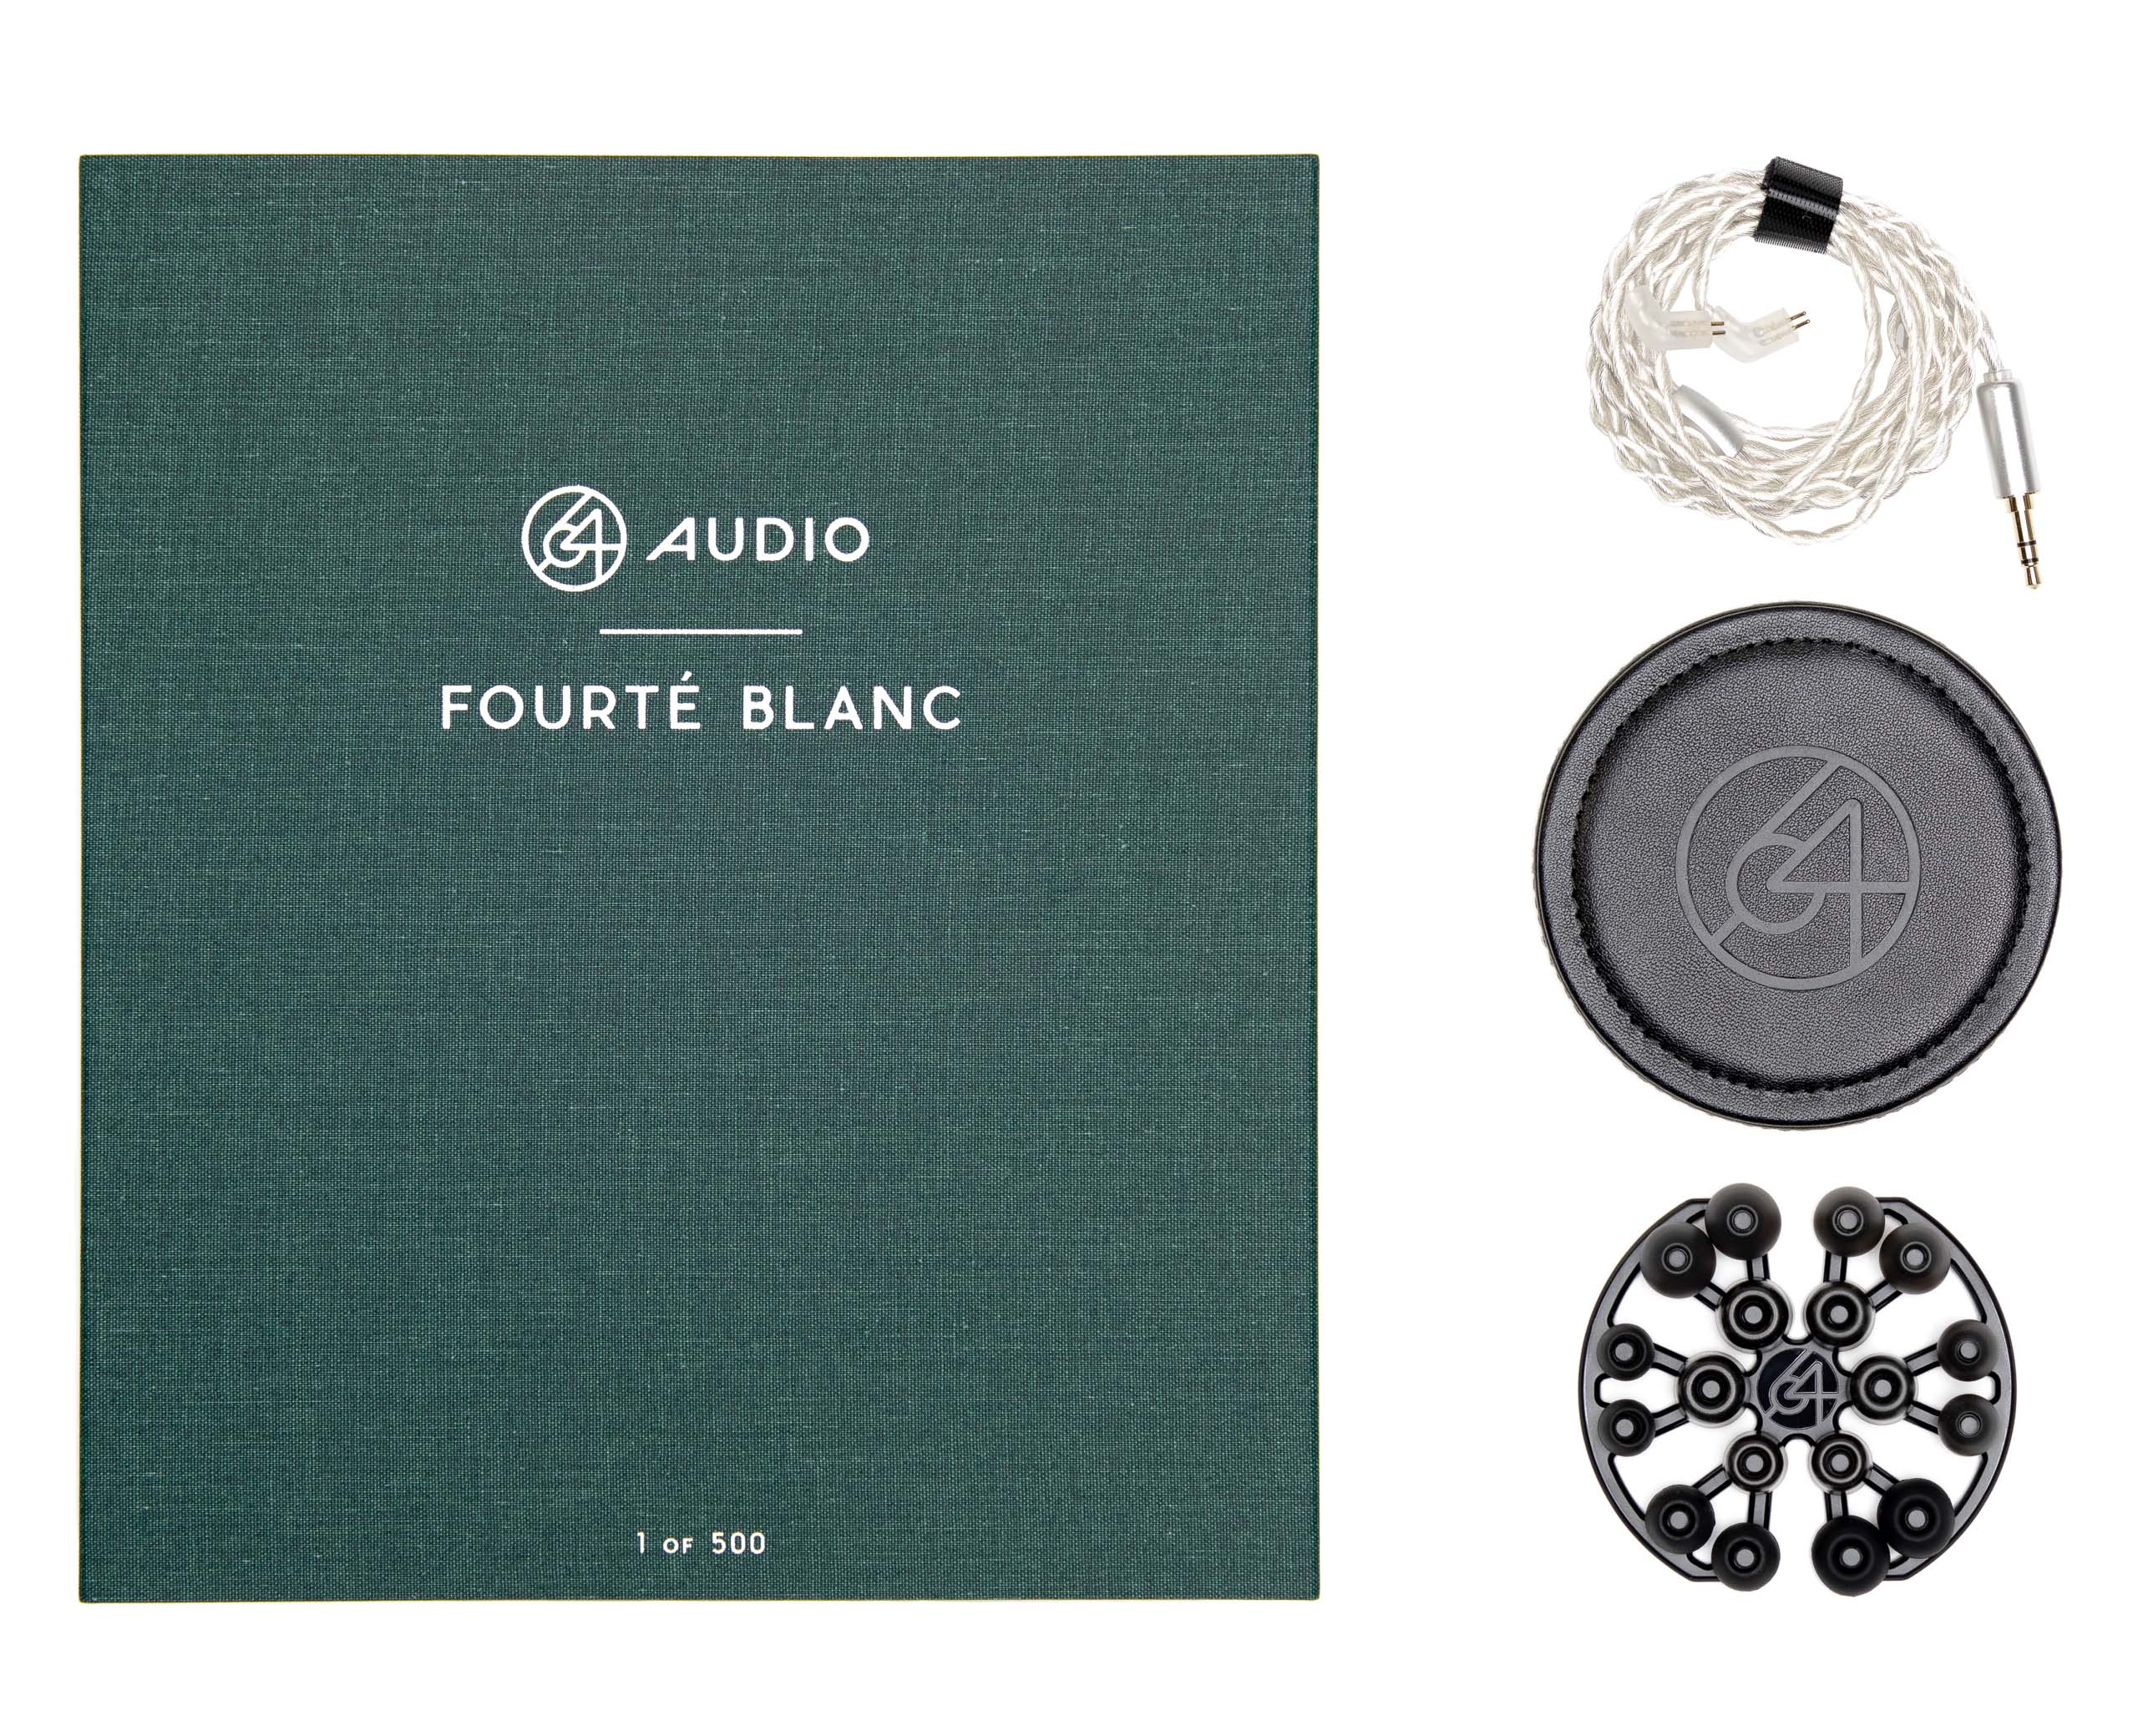 64 Audio Fourte Blanc Included Accessories